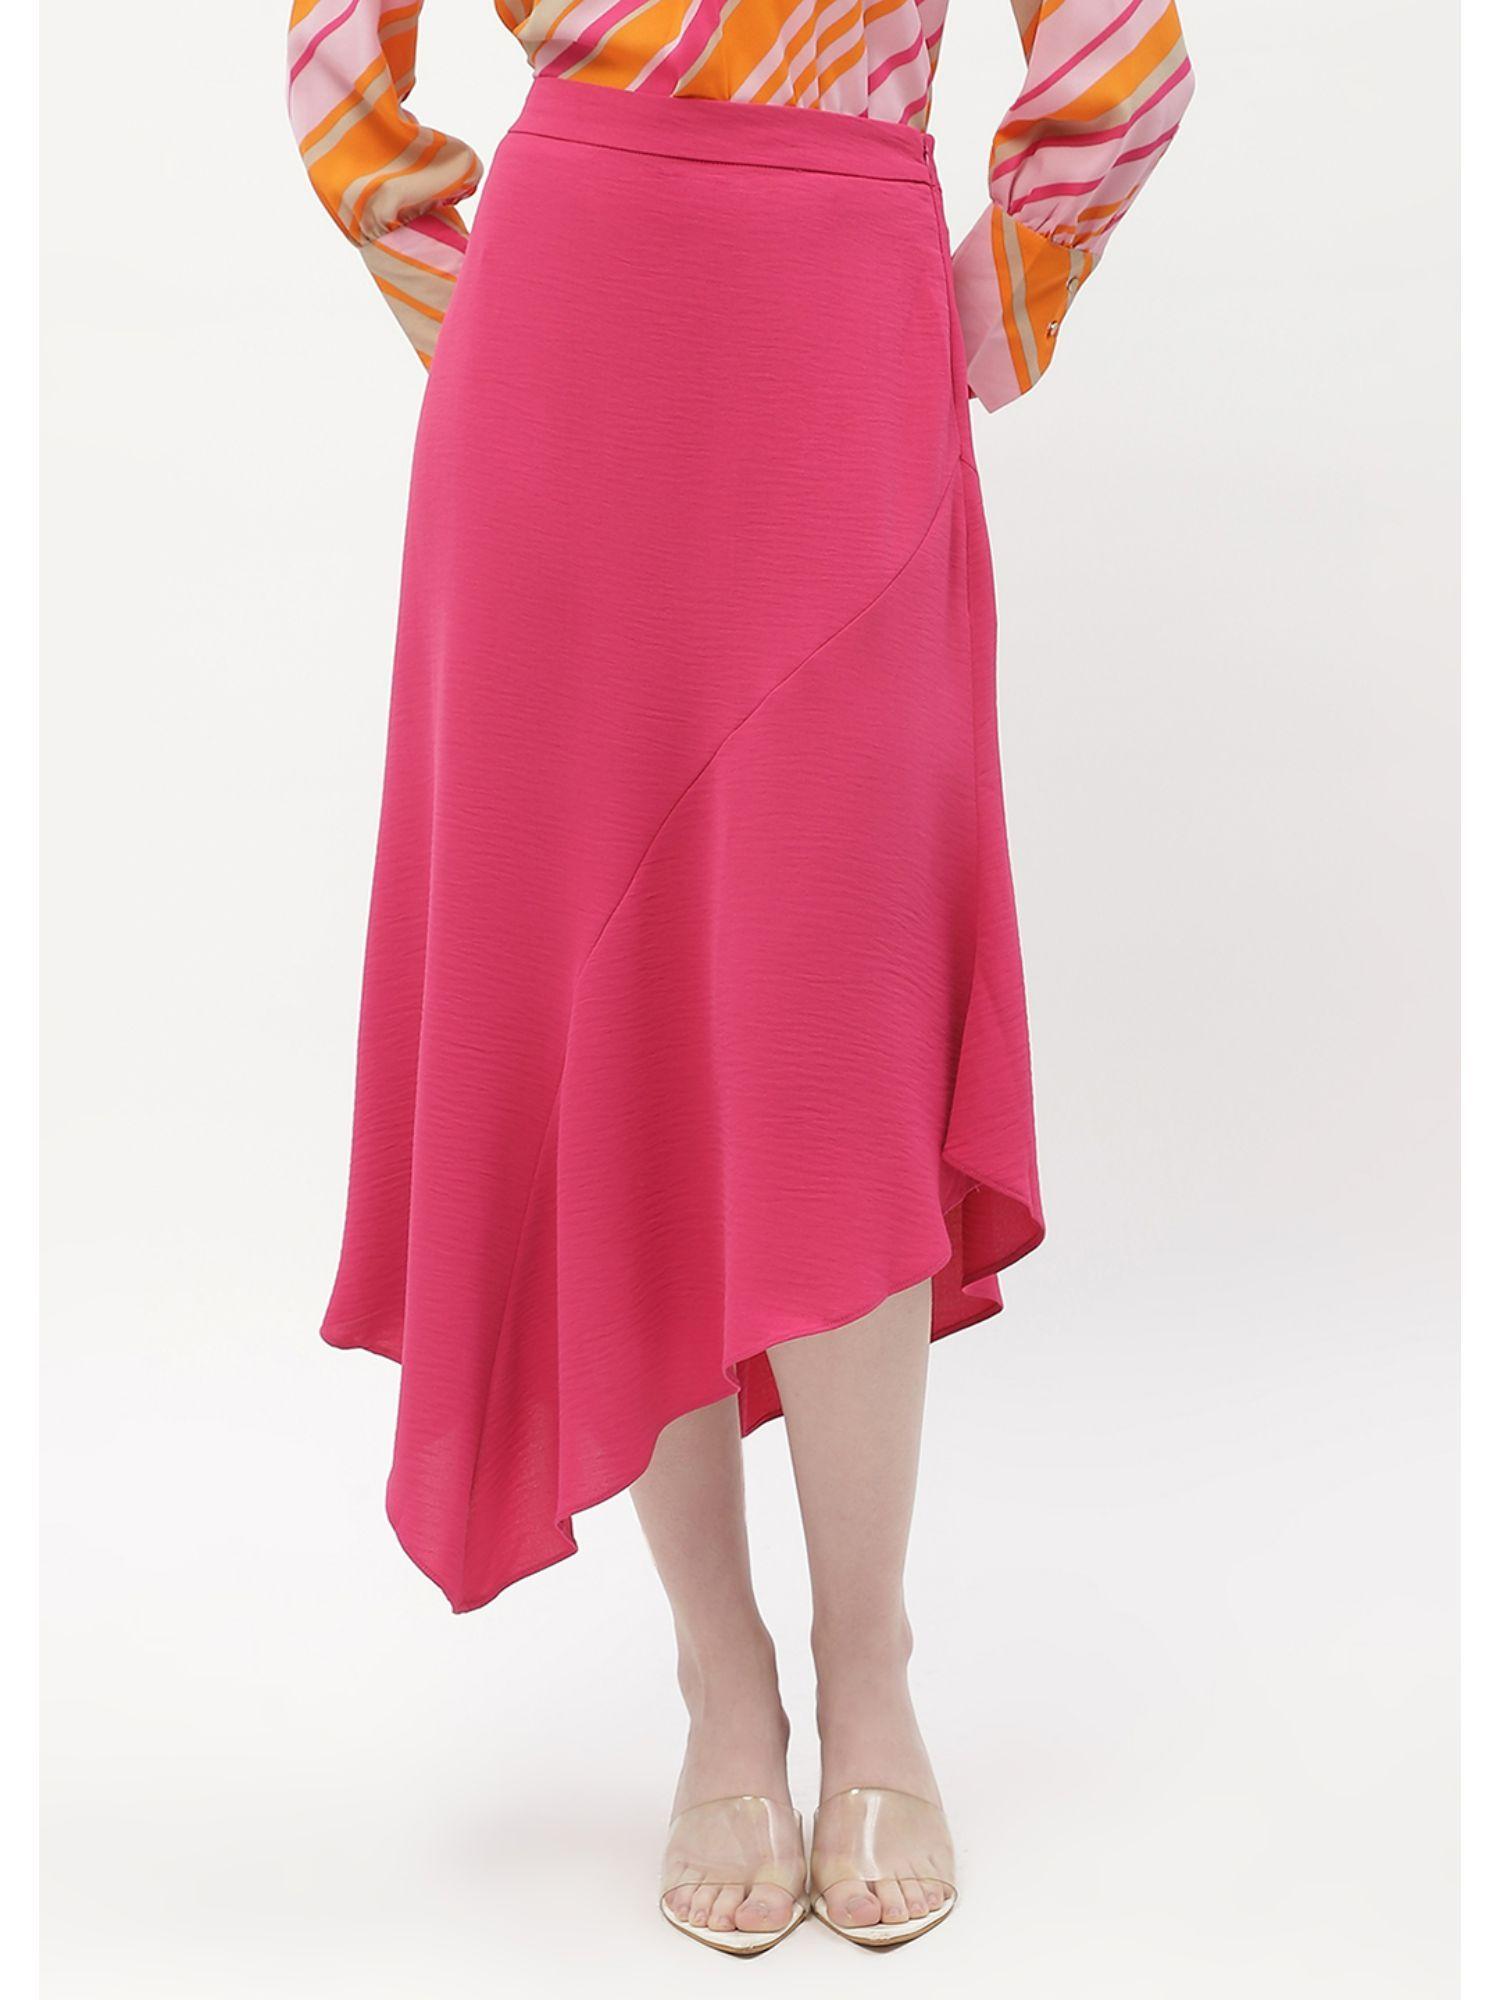 solid hot pink asymmetric skirt